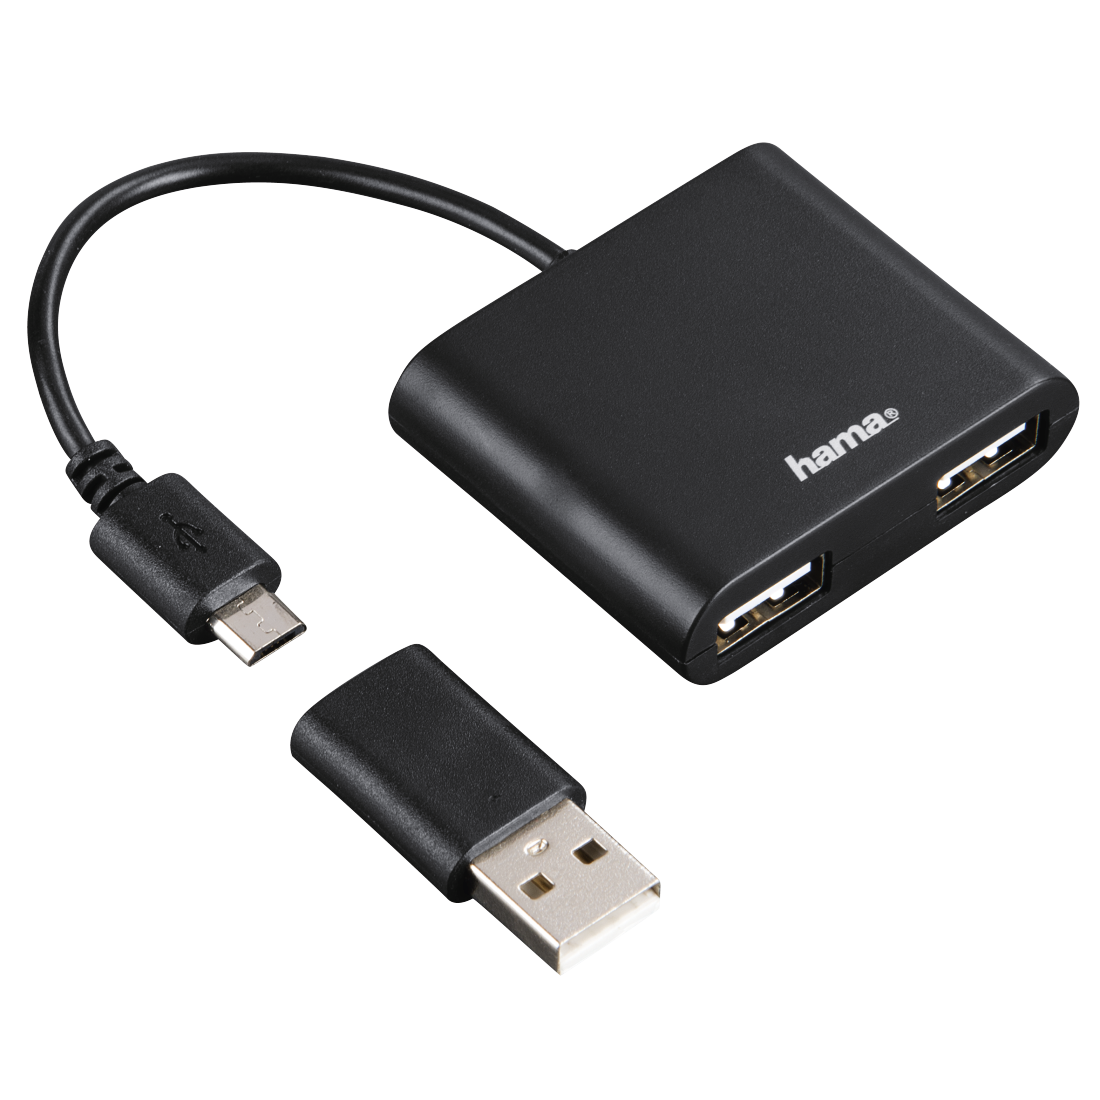 00054140 Hama USB 2.0 OTG Hub 1:2 for Smartphone/Tablet/Notebook/PC |  hama.com